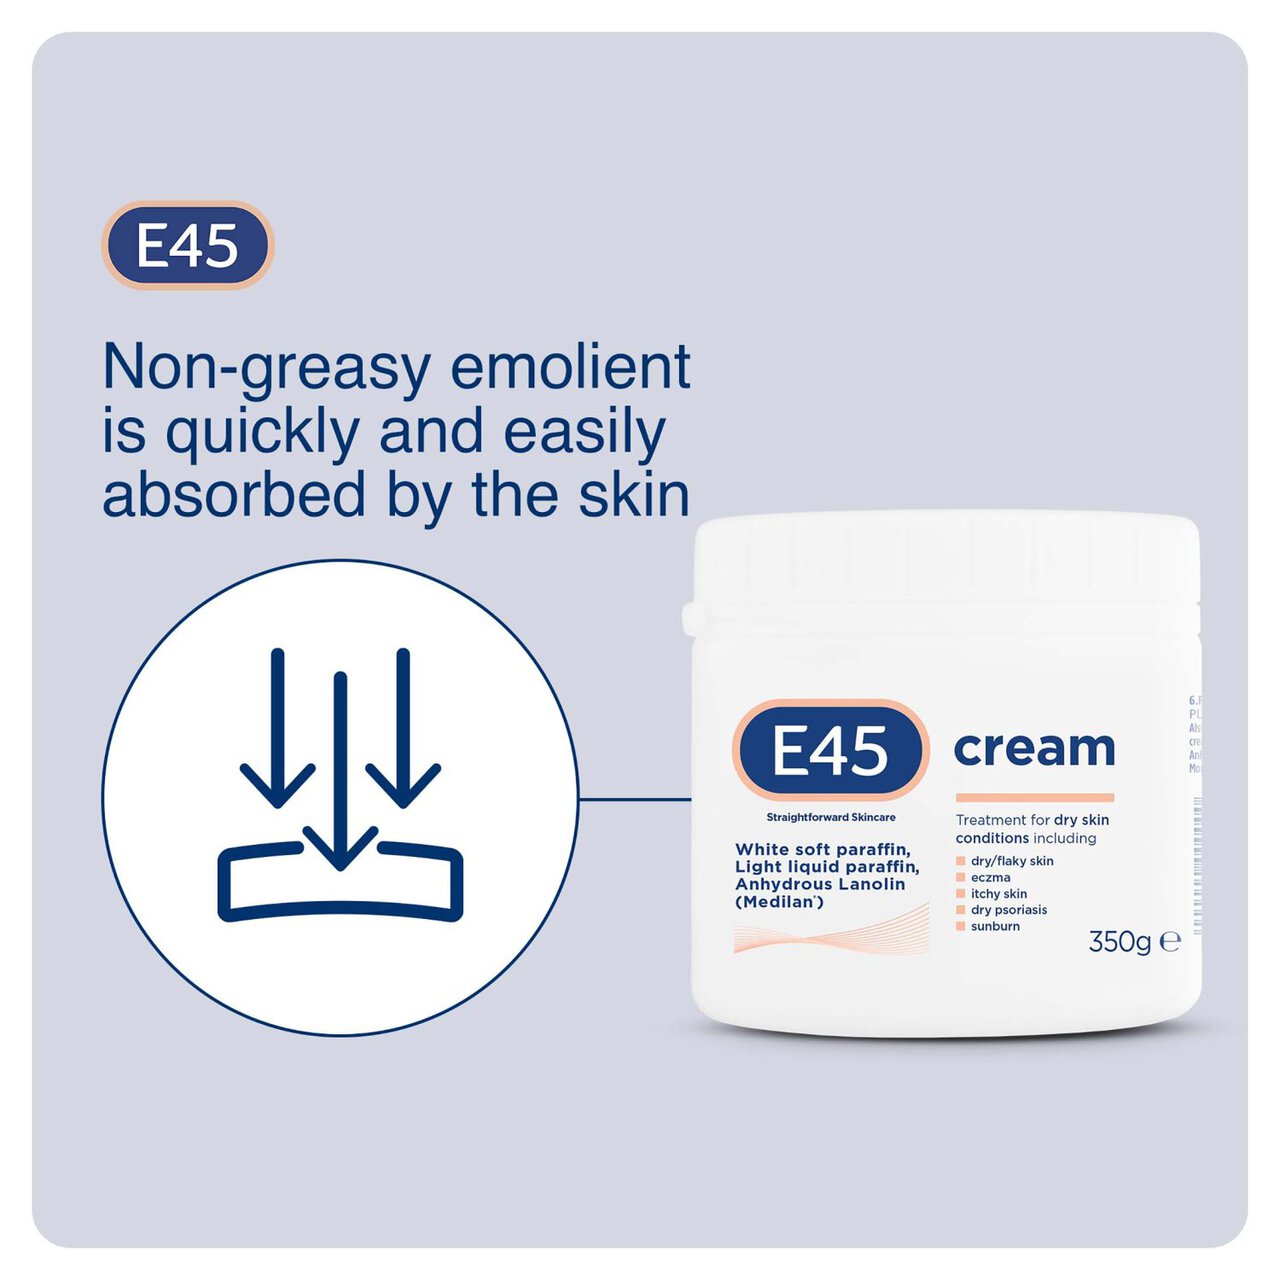 E45 Moisturiser Cream, body, face and hands cream for very dry skin 350g